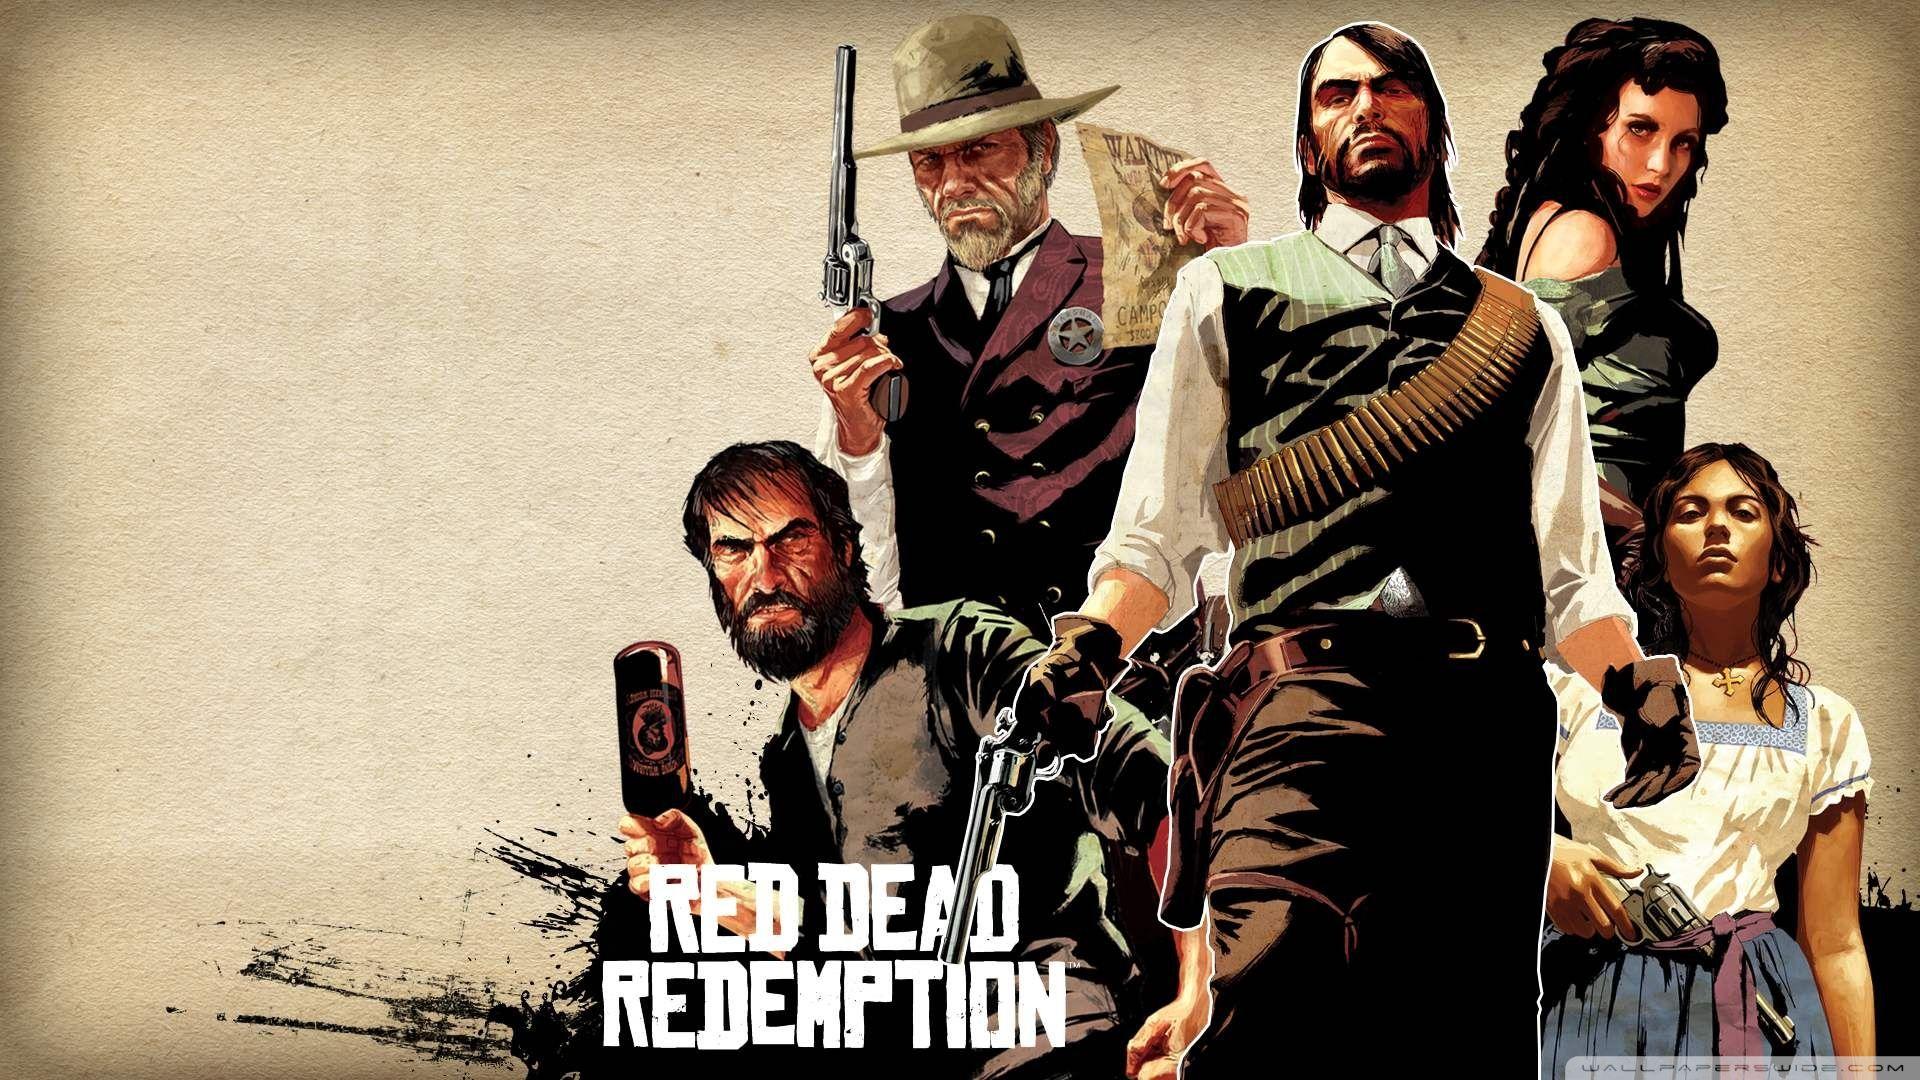 Red Dead Redemption HD desktop wallpaper, High Definition